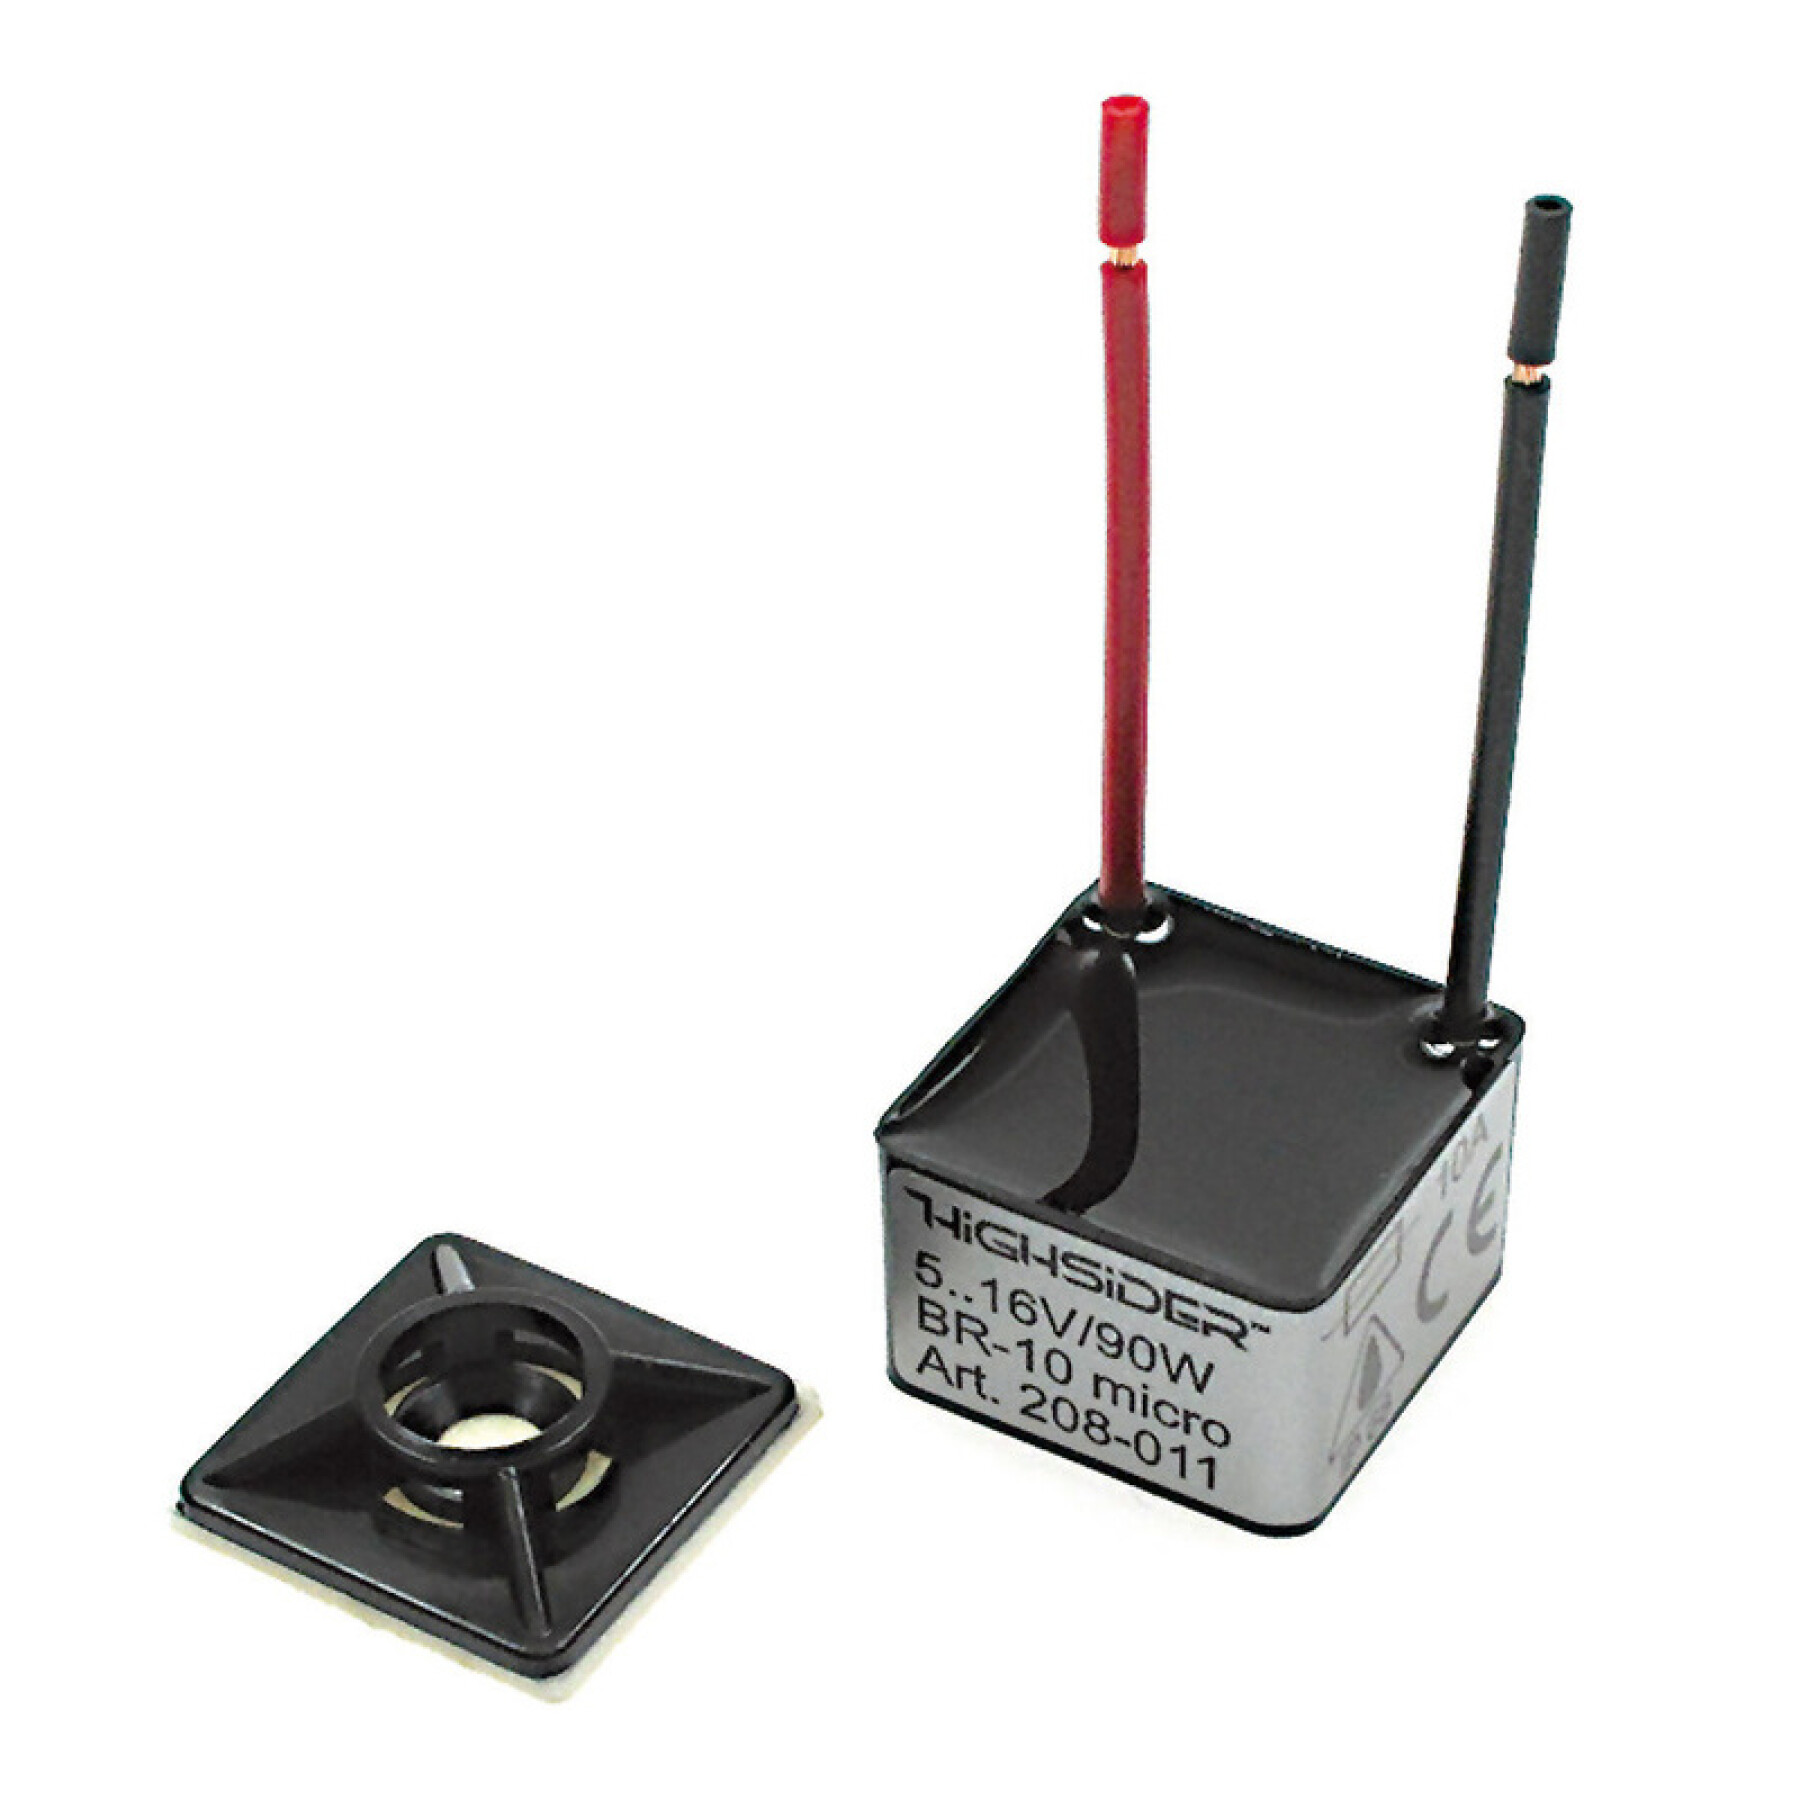 Digital flasher relay Highsider Br10-Micro